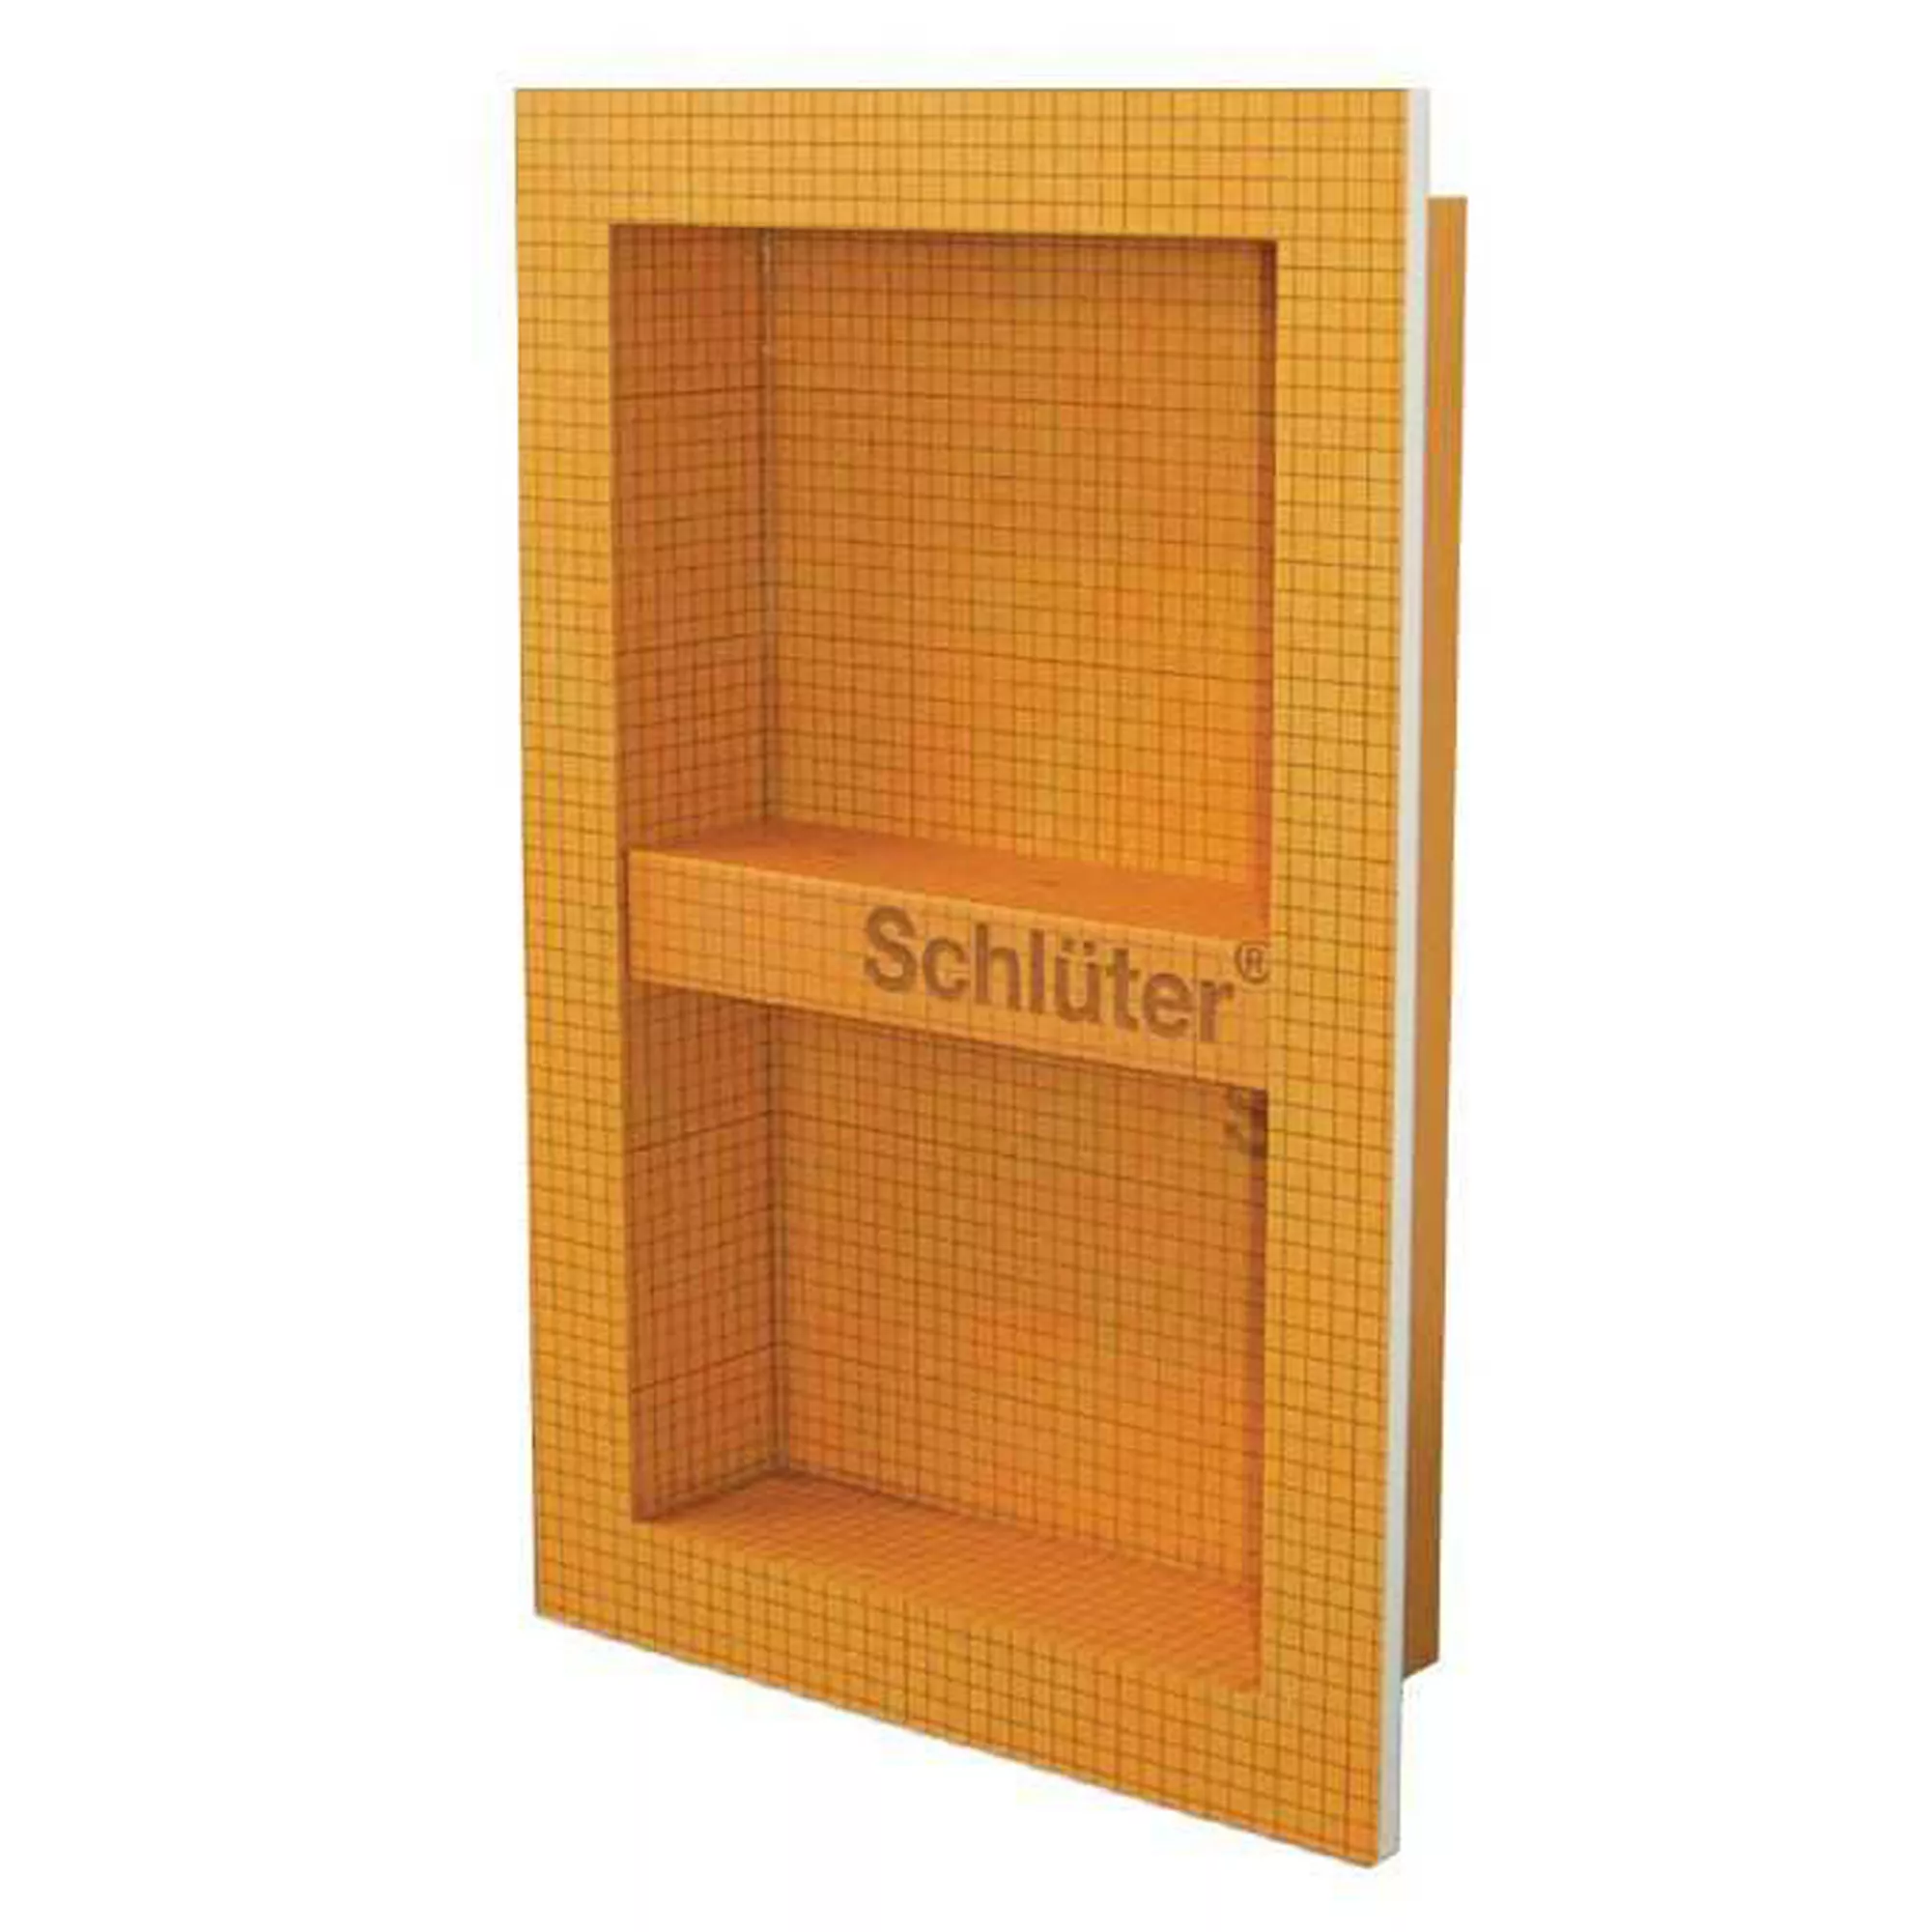 Schlüter Kerdi Board N - Ниша за съхранение (305x508x89mm)